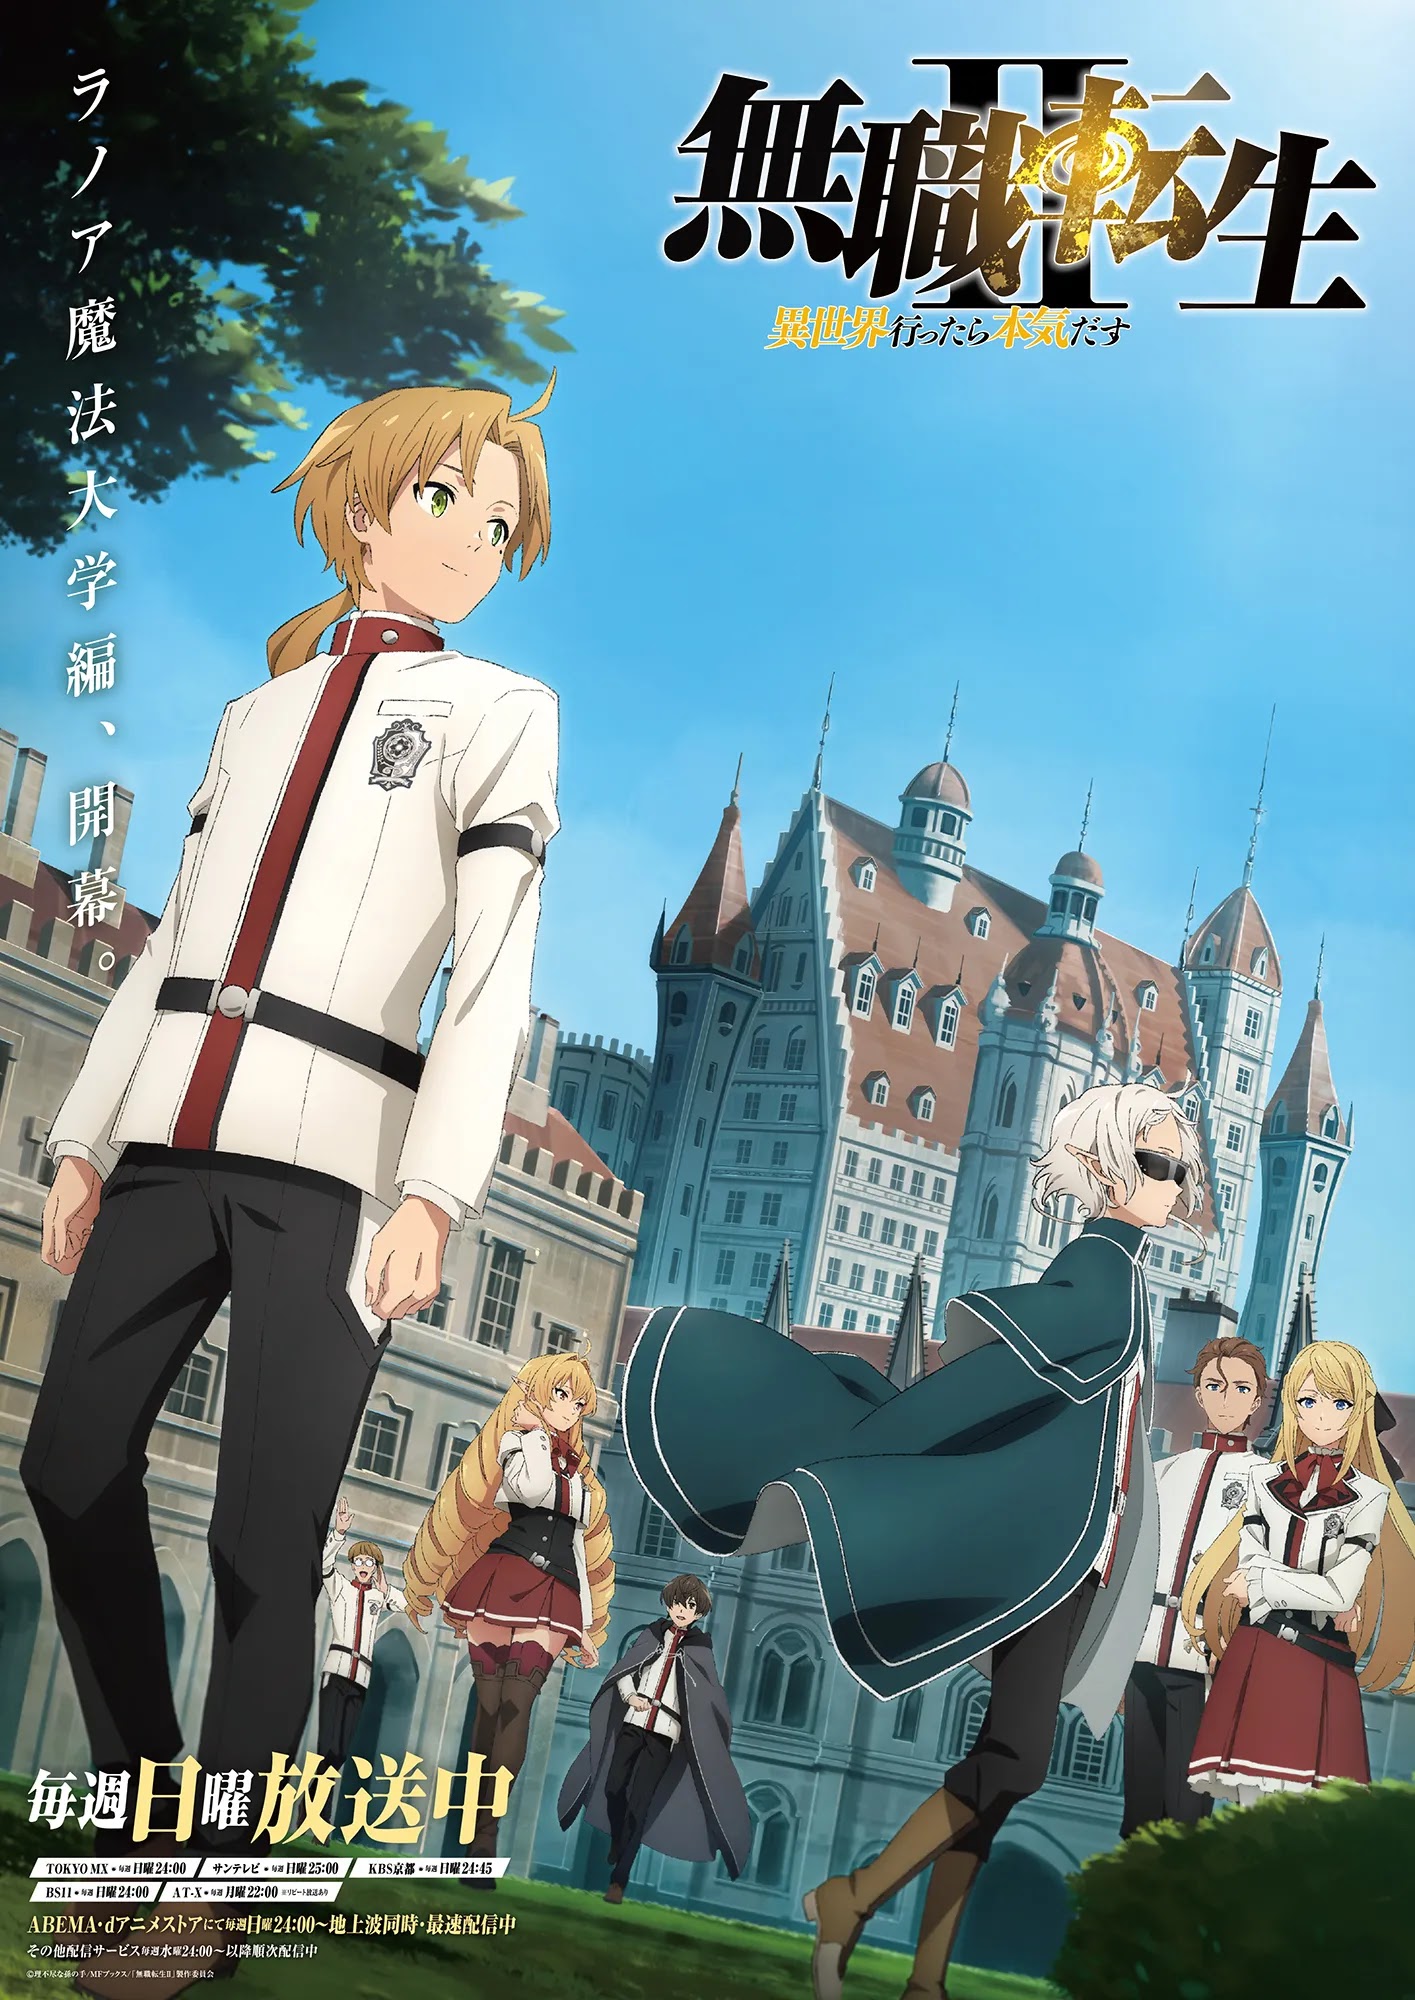 Mushoku Tensei 2ª Temporada Episódio 11 #Anime #mushokutensei #animesc